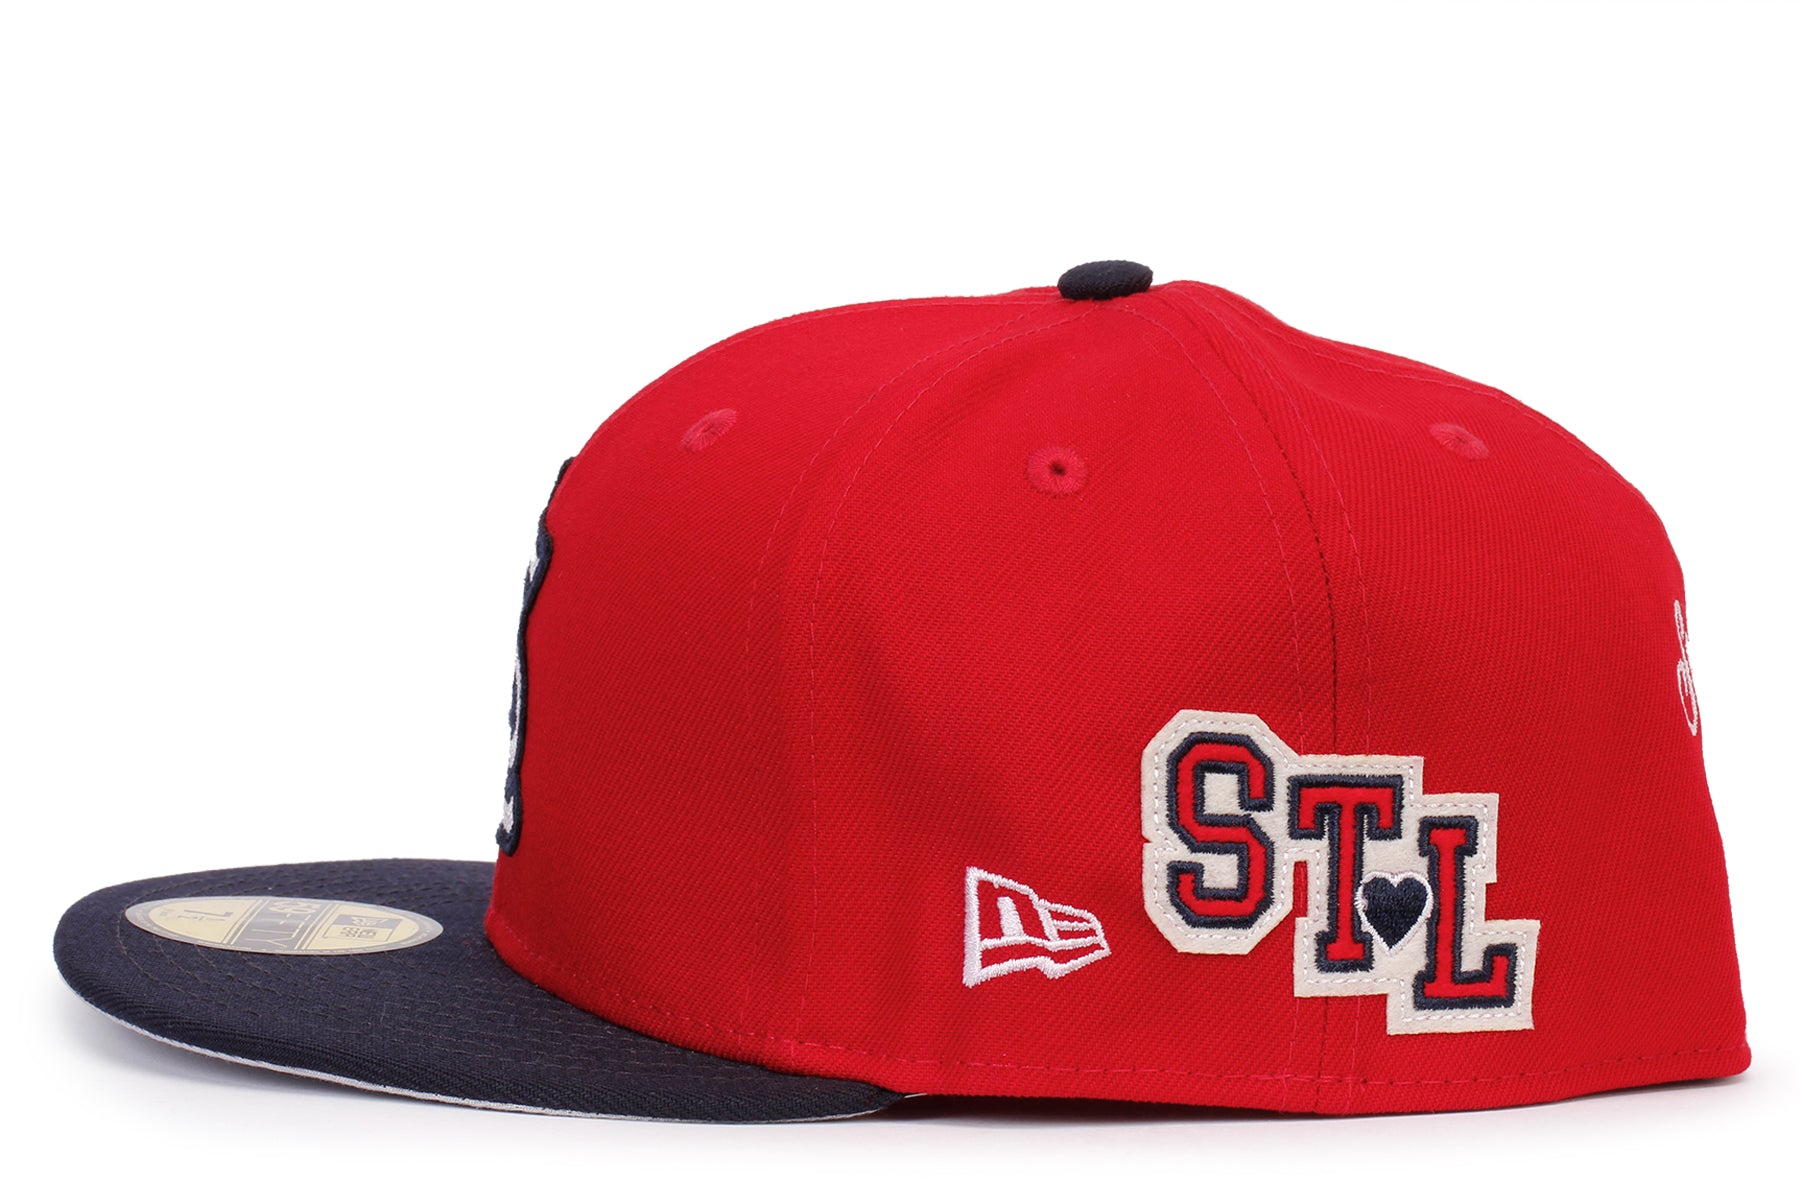 St. Louis Cardinals - 59FIFTY Black on Black Hat, New Era | 7 1/2